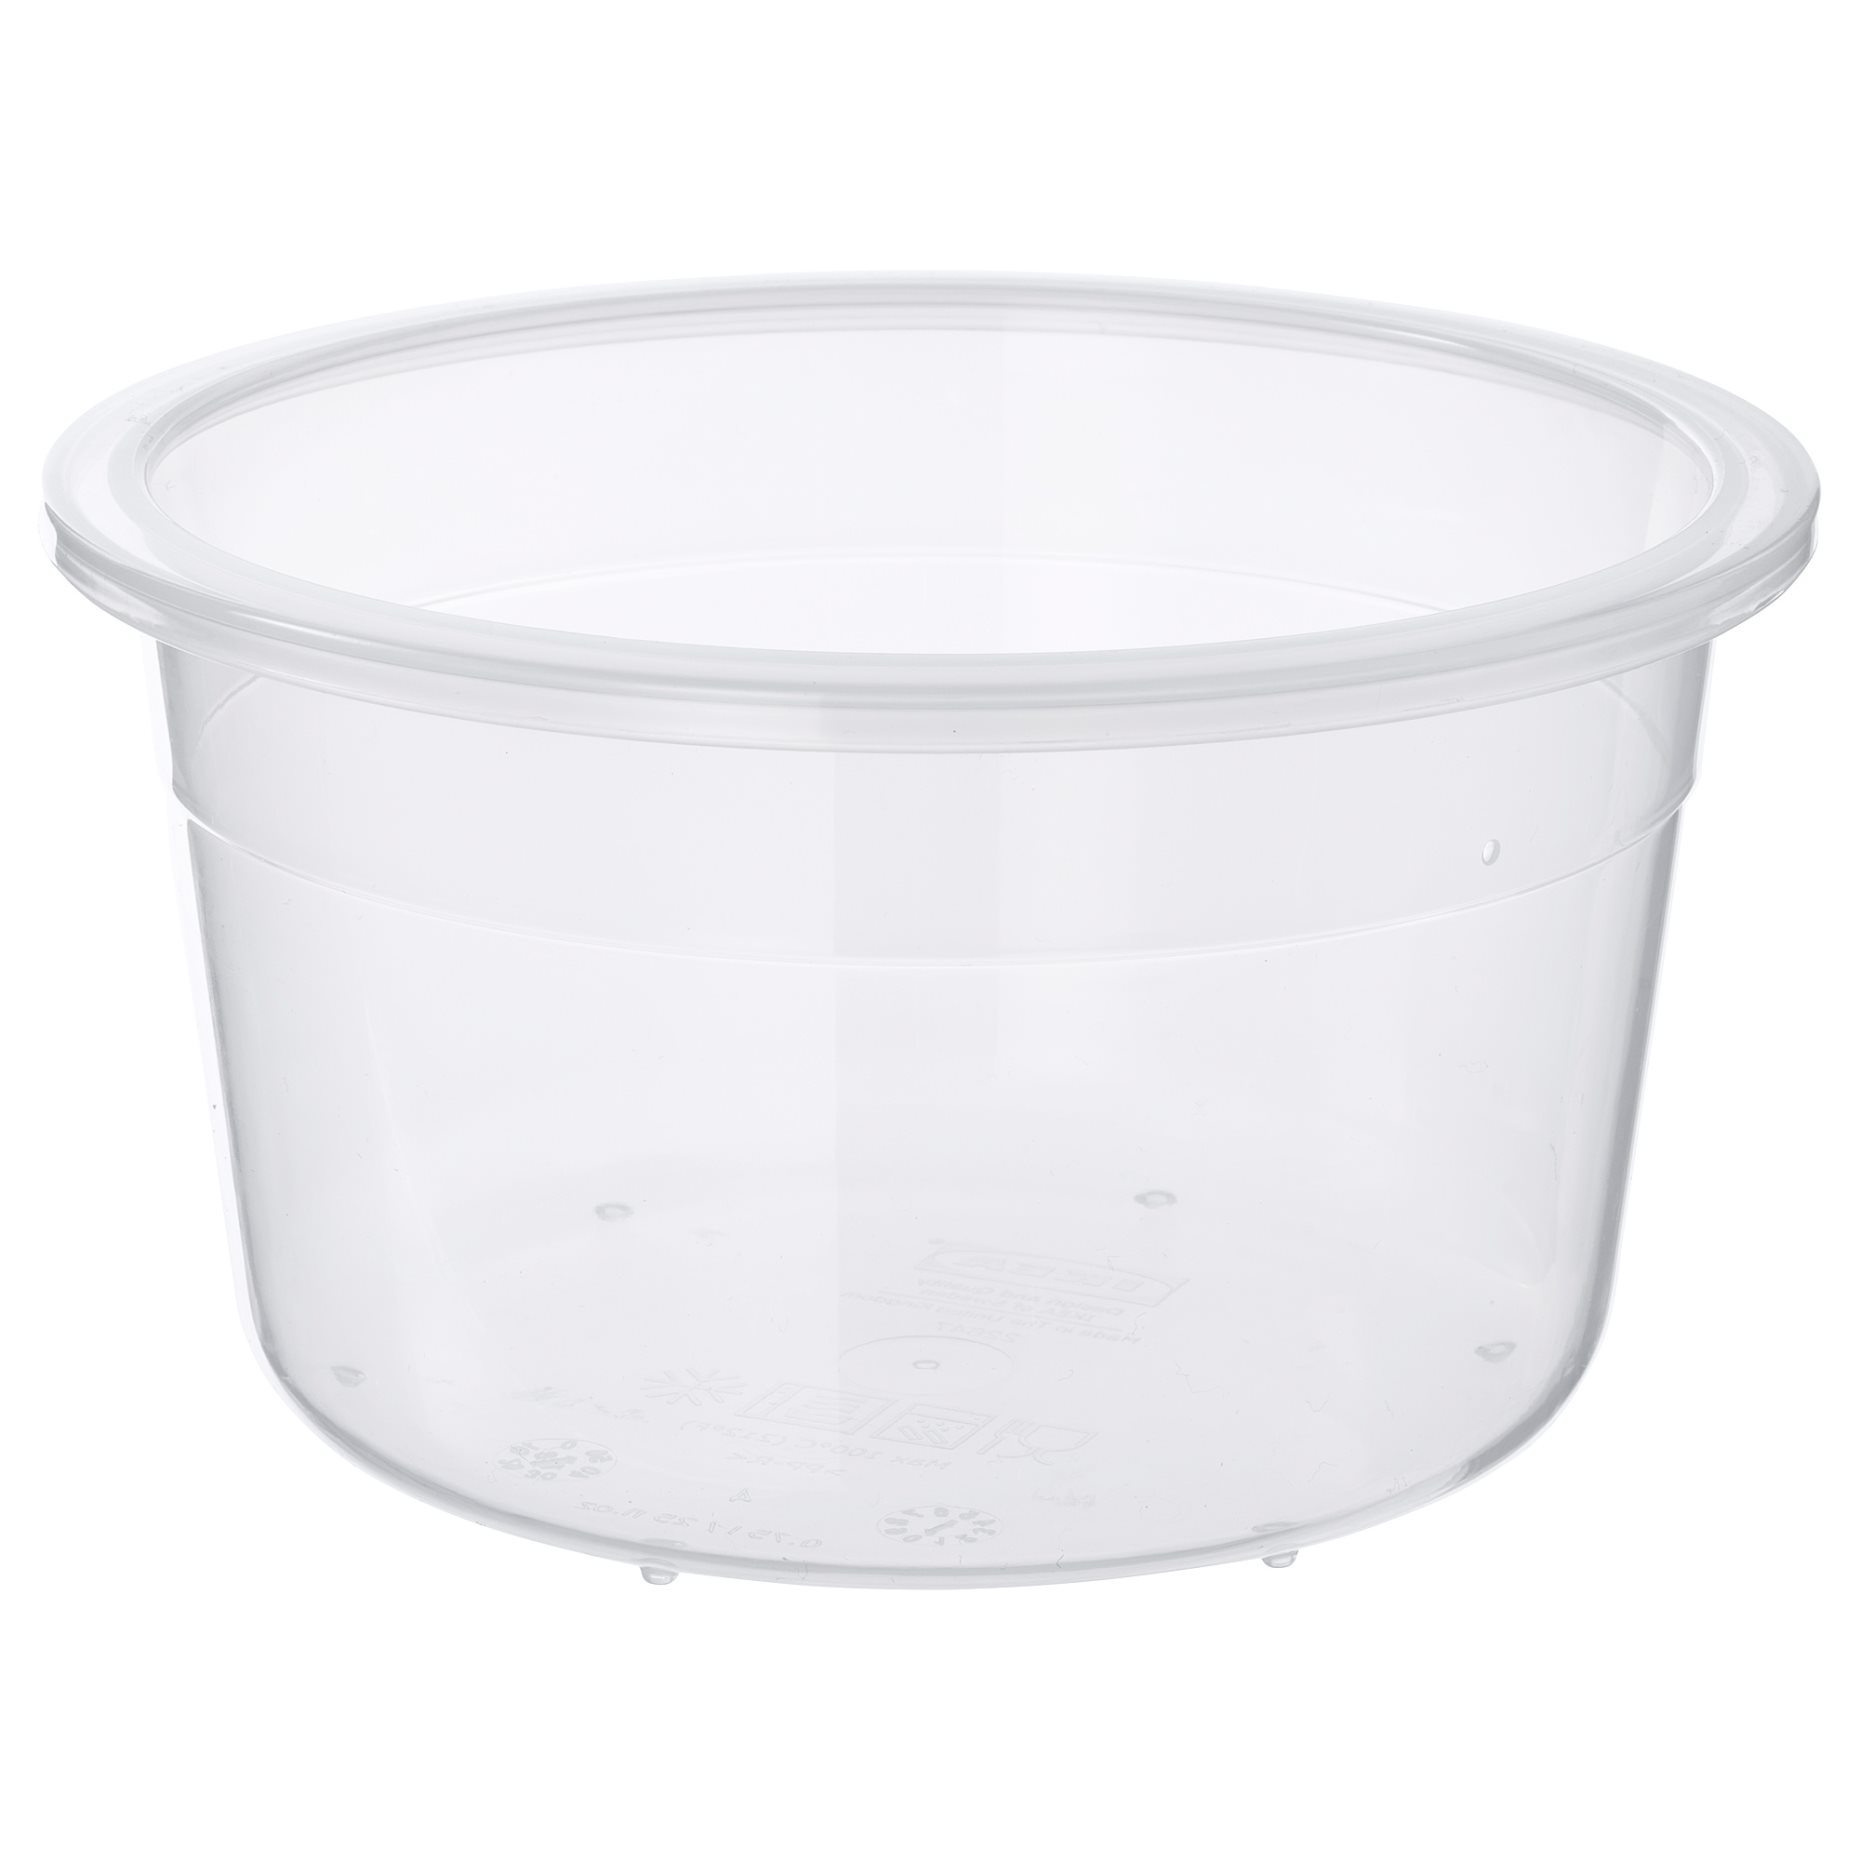 IKEA 365+, food container round/plastic, 750 ml, 003.591.45